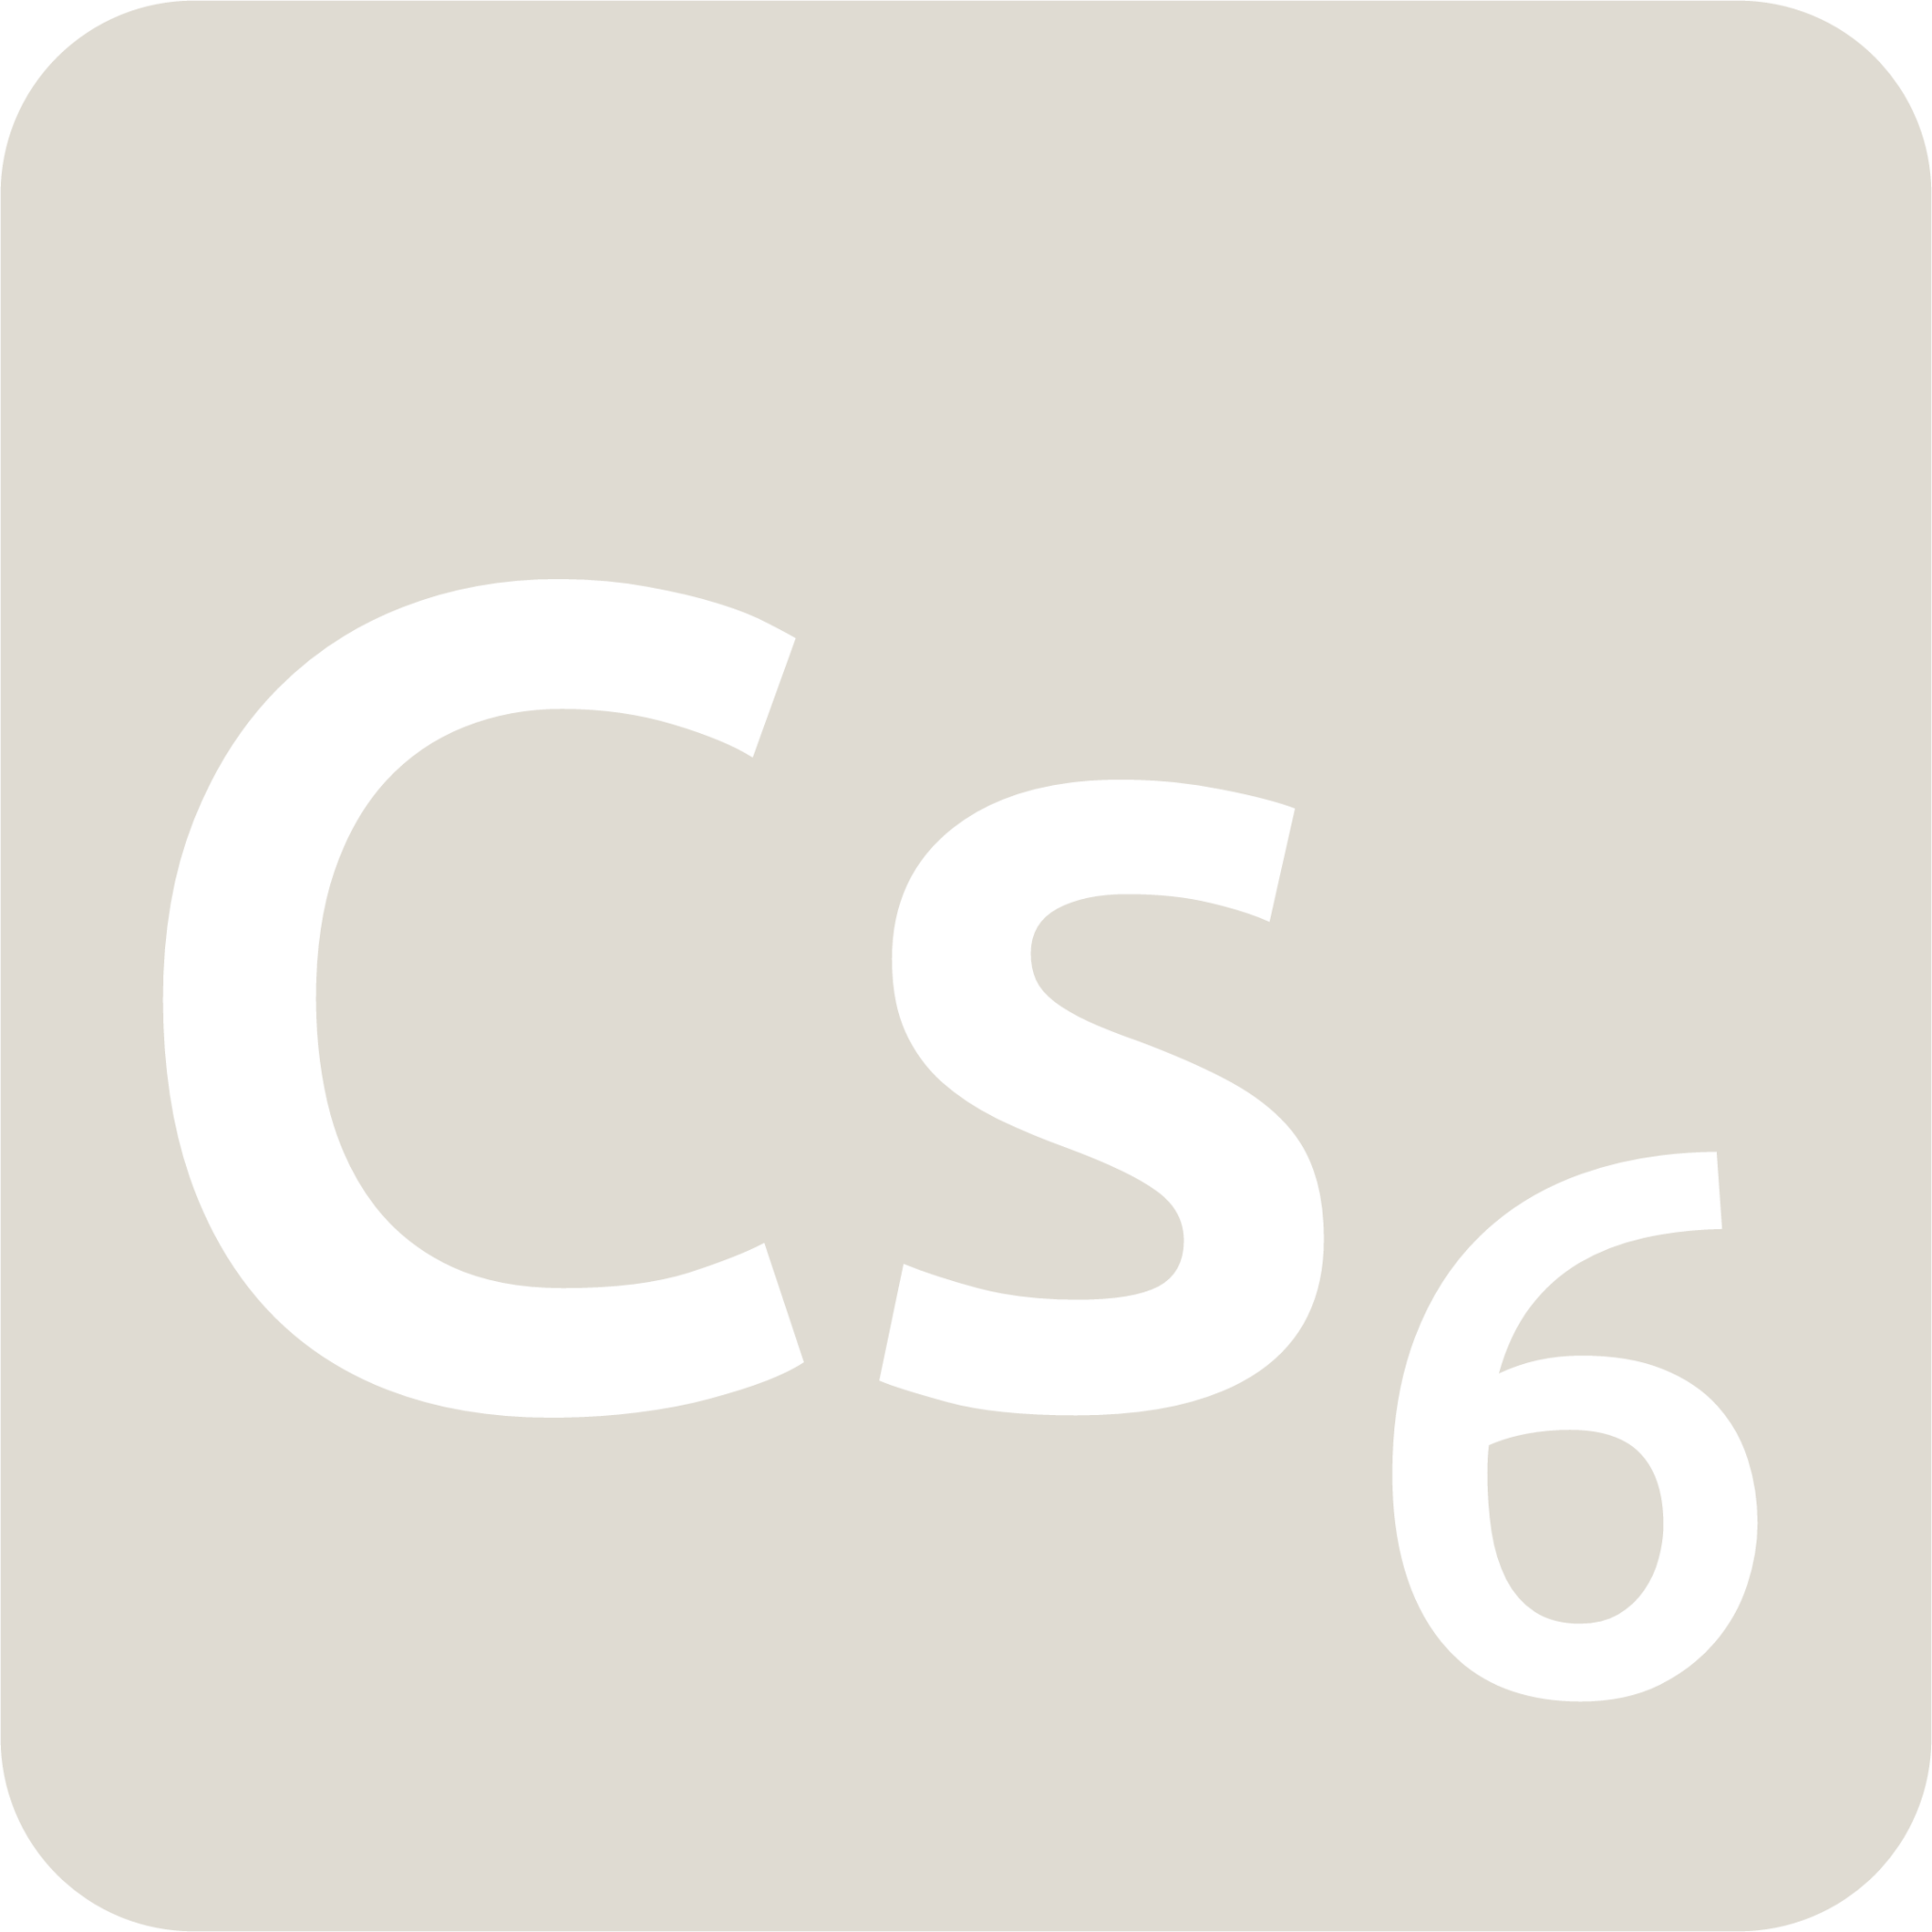 indicator keyboard Cs 6 icon